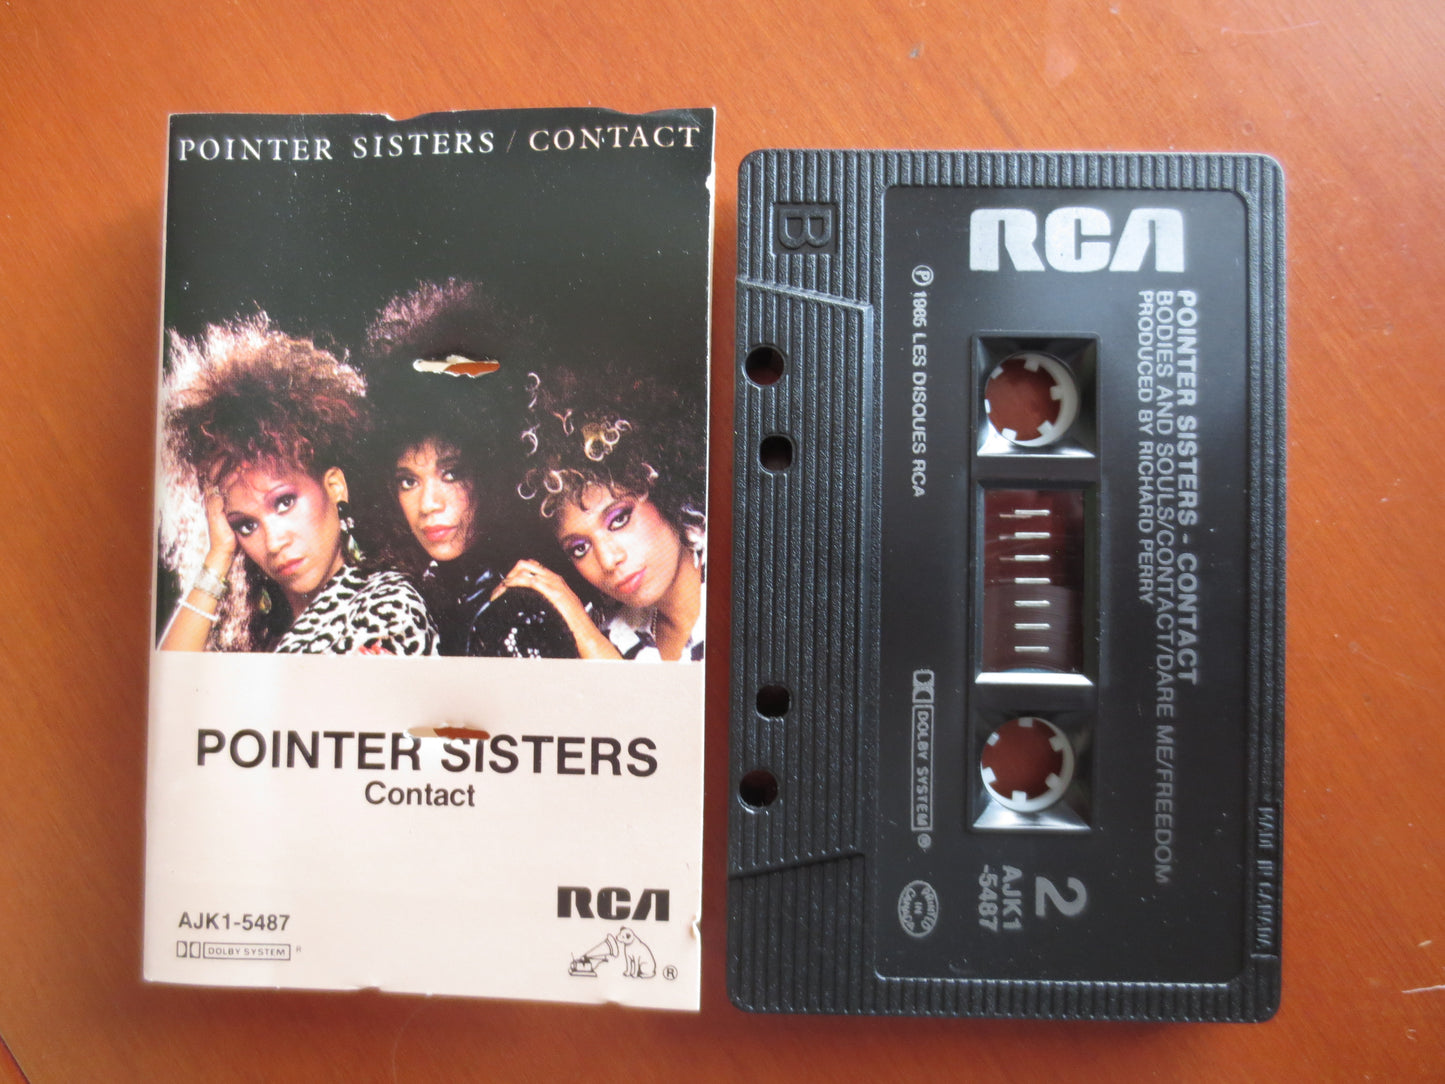 The POINTER SISTERS, Contact Album, POINTER Sisters Tape, Disco Music Cassette, Tape Cassette, Pop Cassette, 1985 Cassette